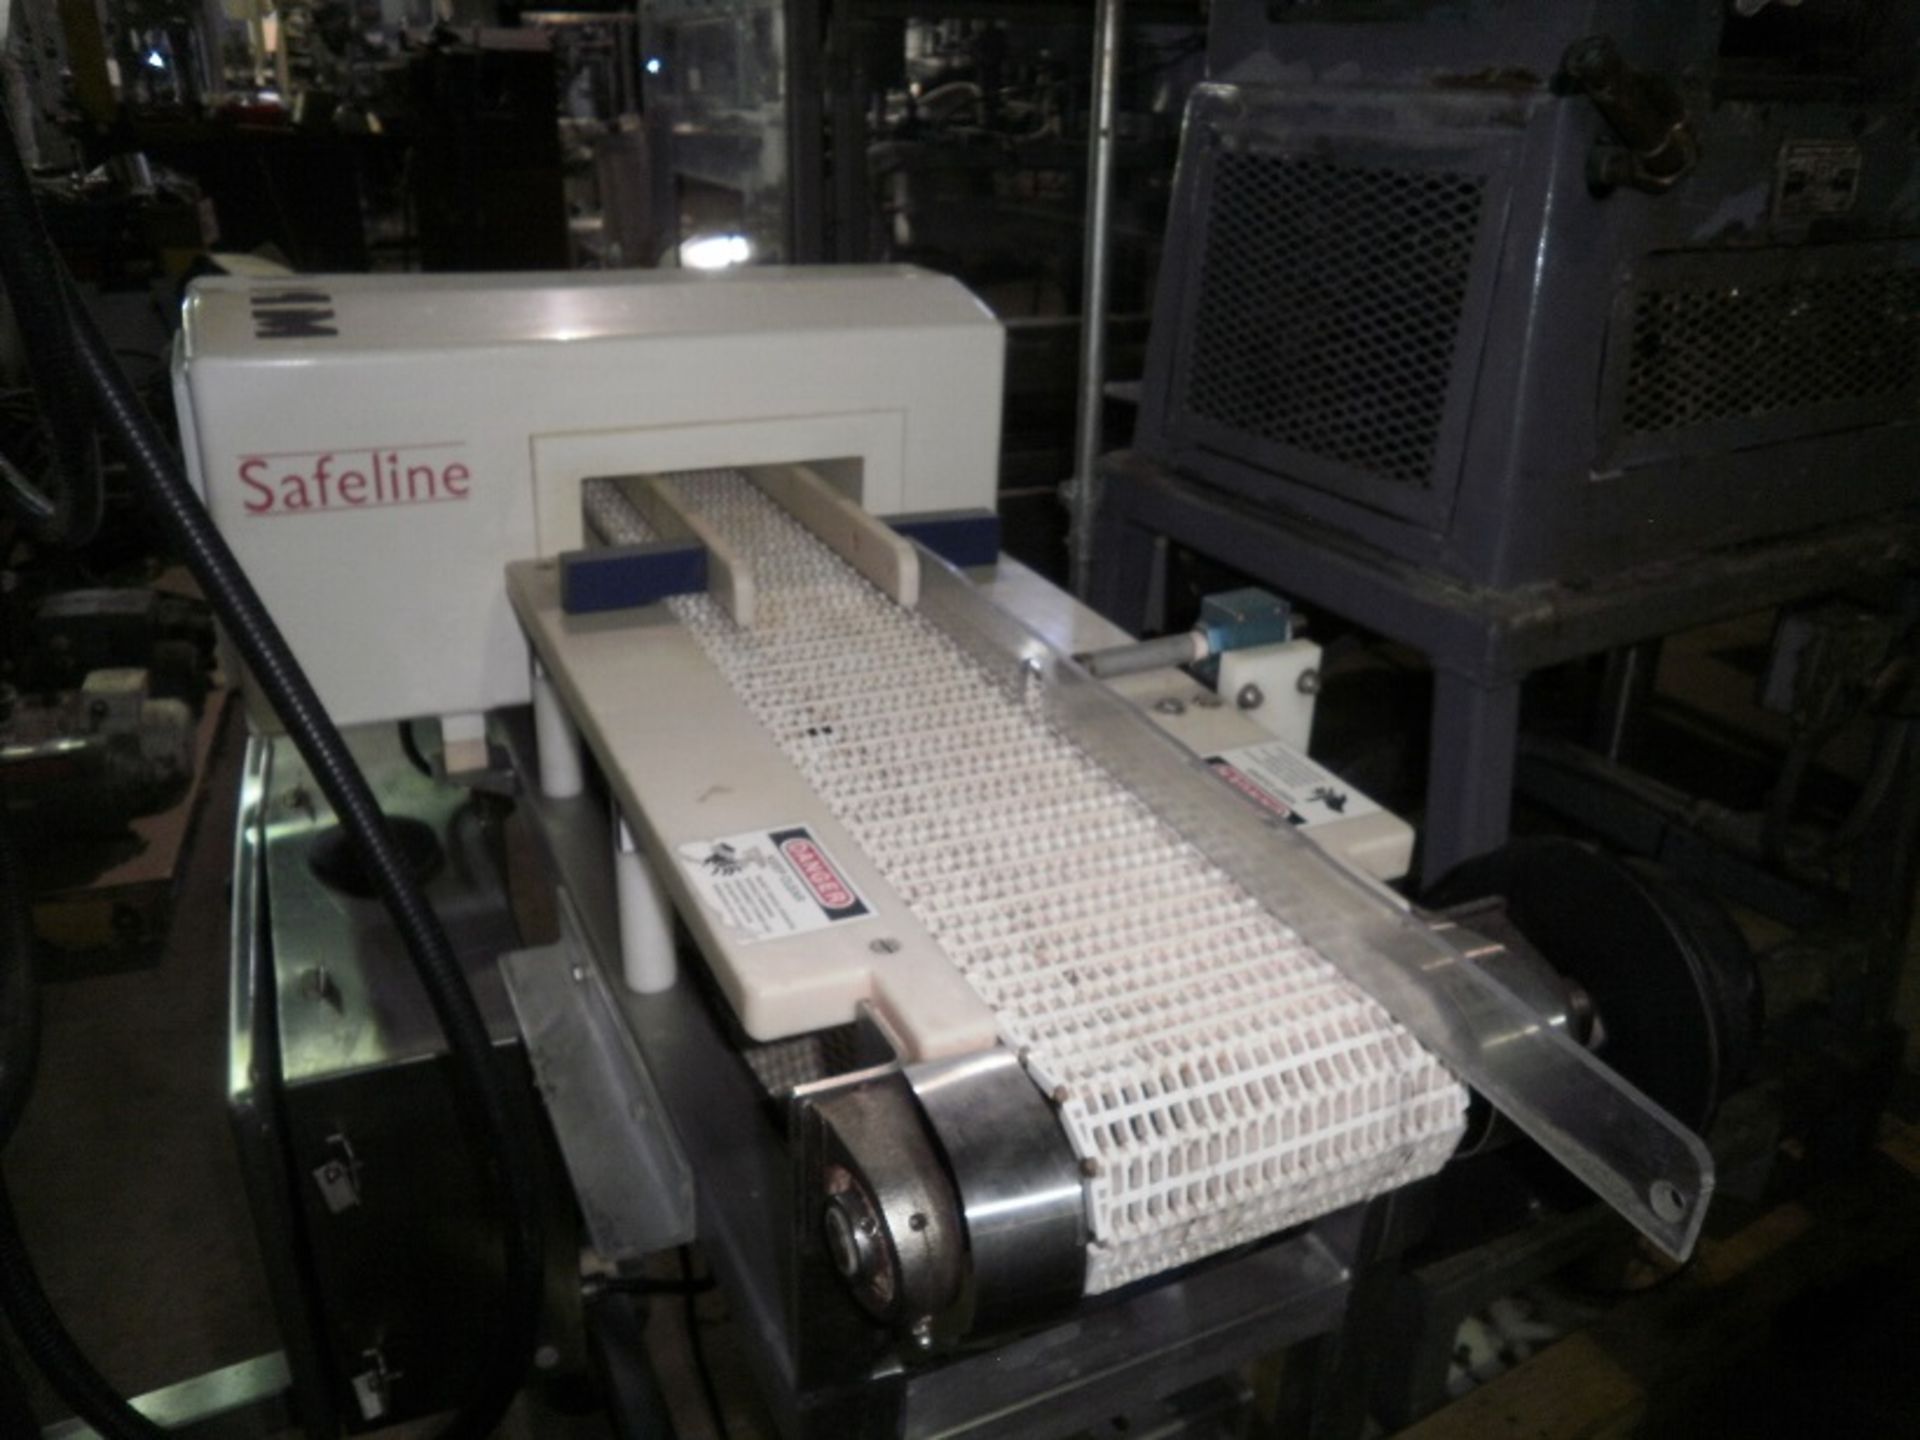 Safeline STD-09 x 03 P/300/ABS/V2 Metal Detector, Serial # 65148, c/w 7” wide x 50” long conveyor, - Image 2 of 2